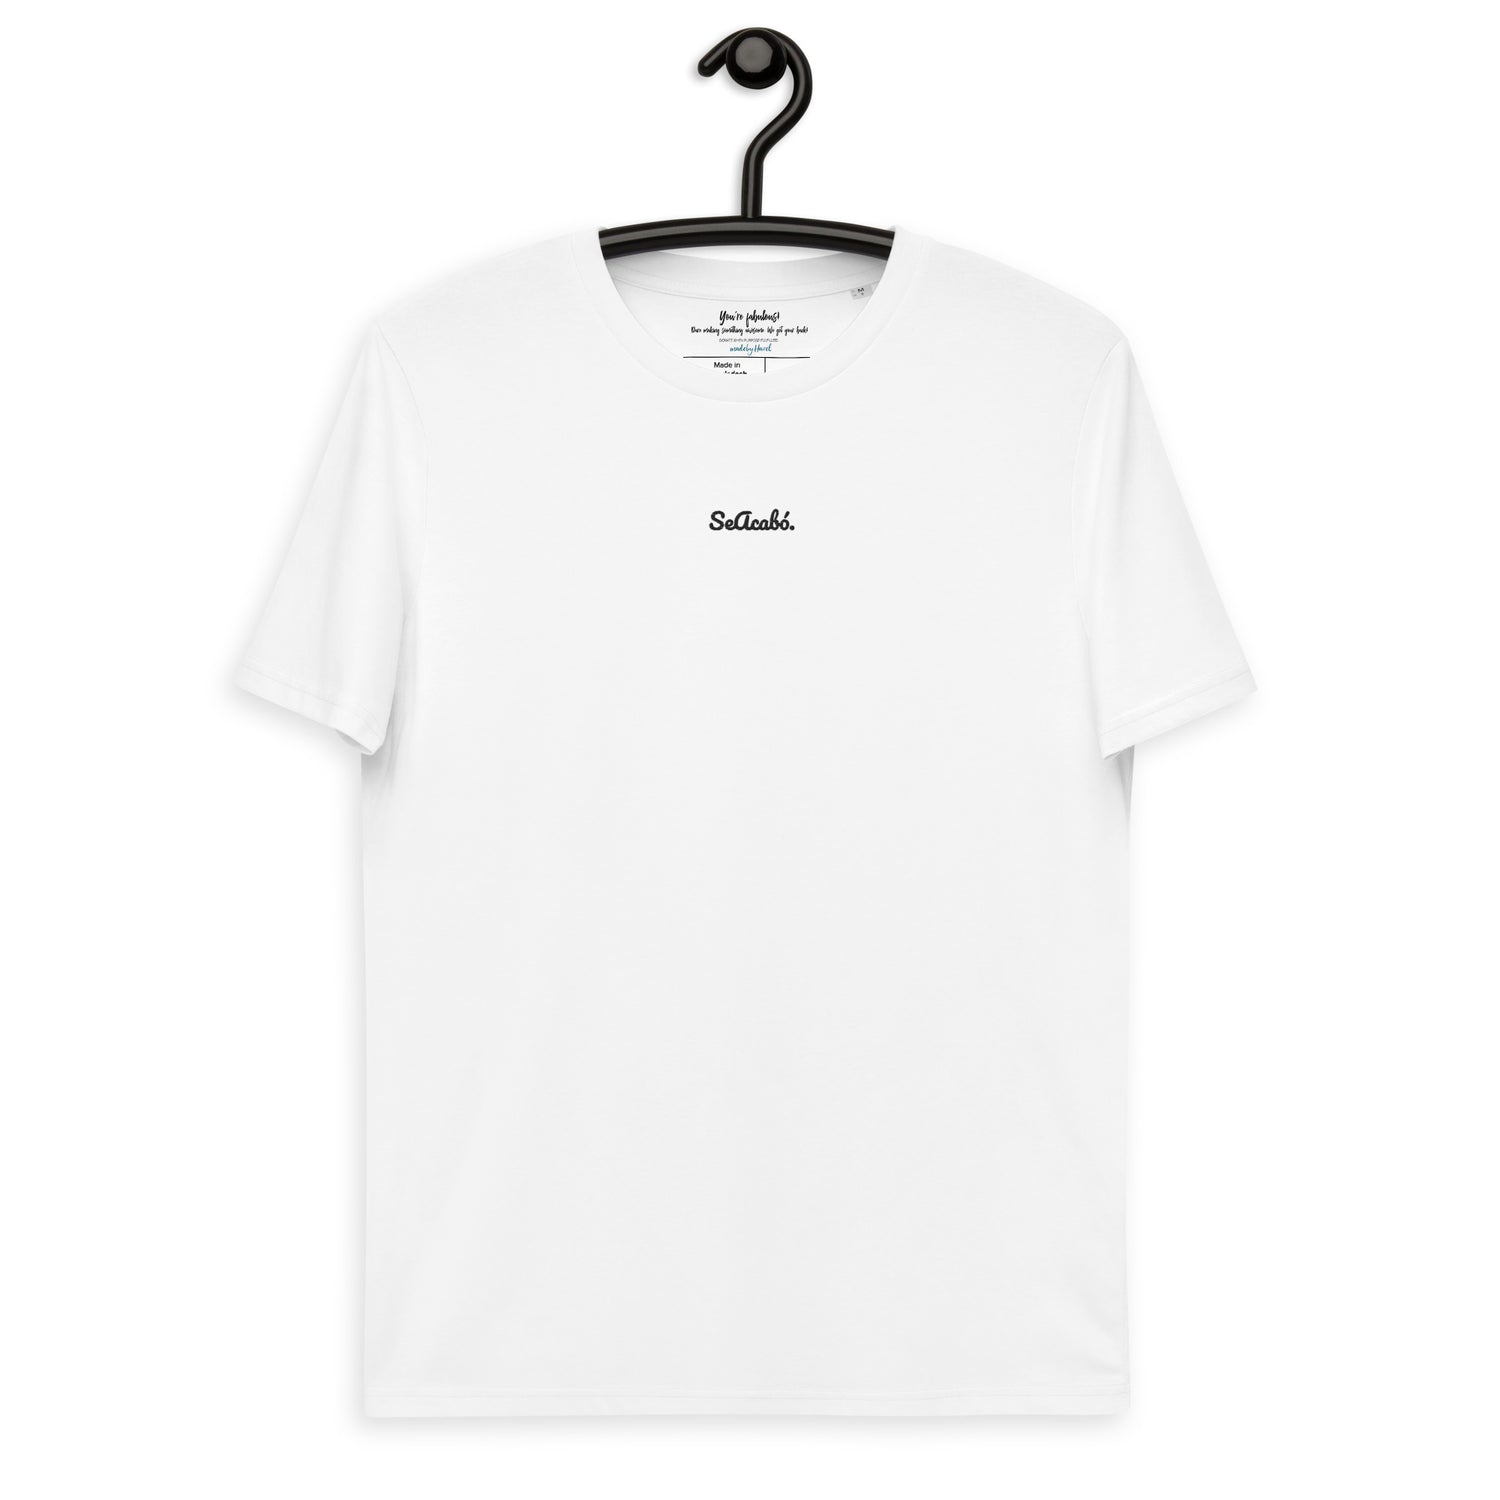 SeAcabó. - White organic cotton T-shirt. Feminist - FIFA - UEFA - Rubiales - Hermoso